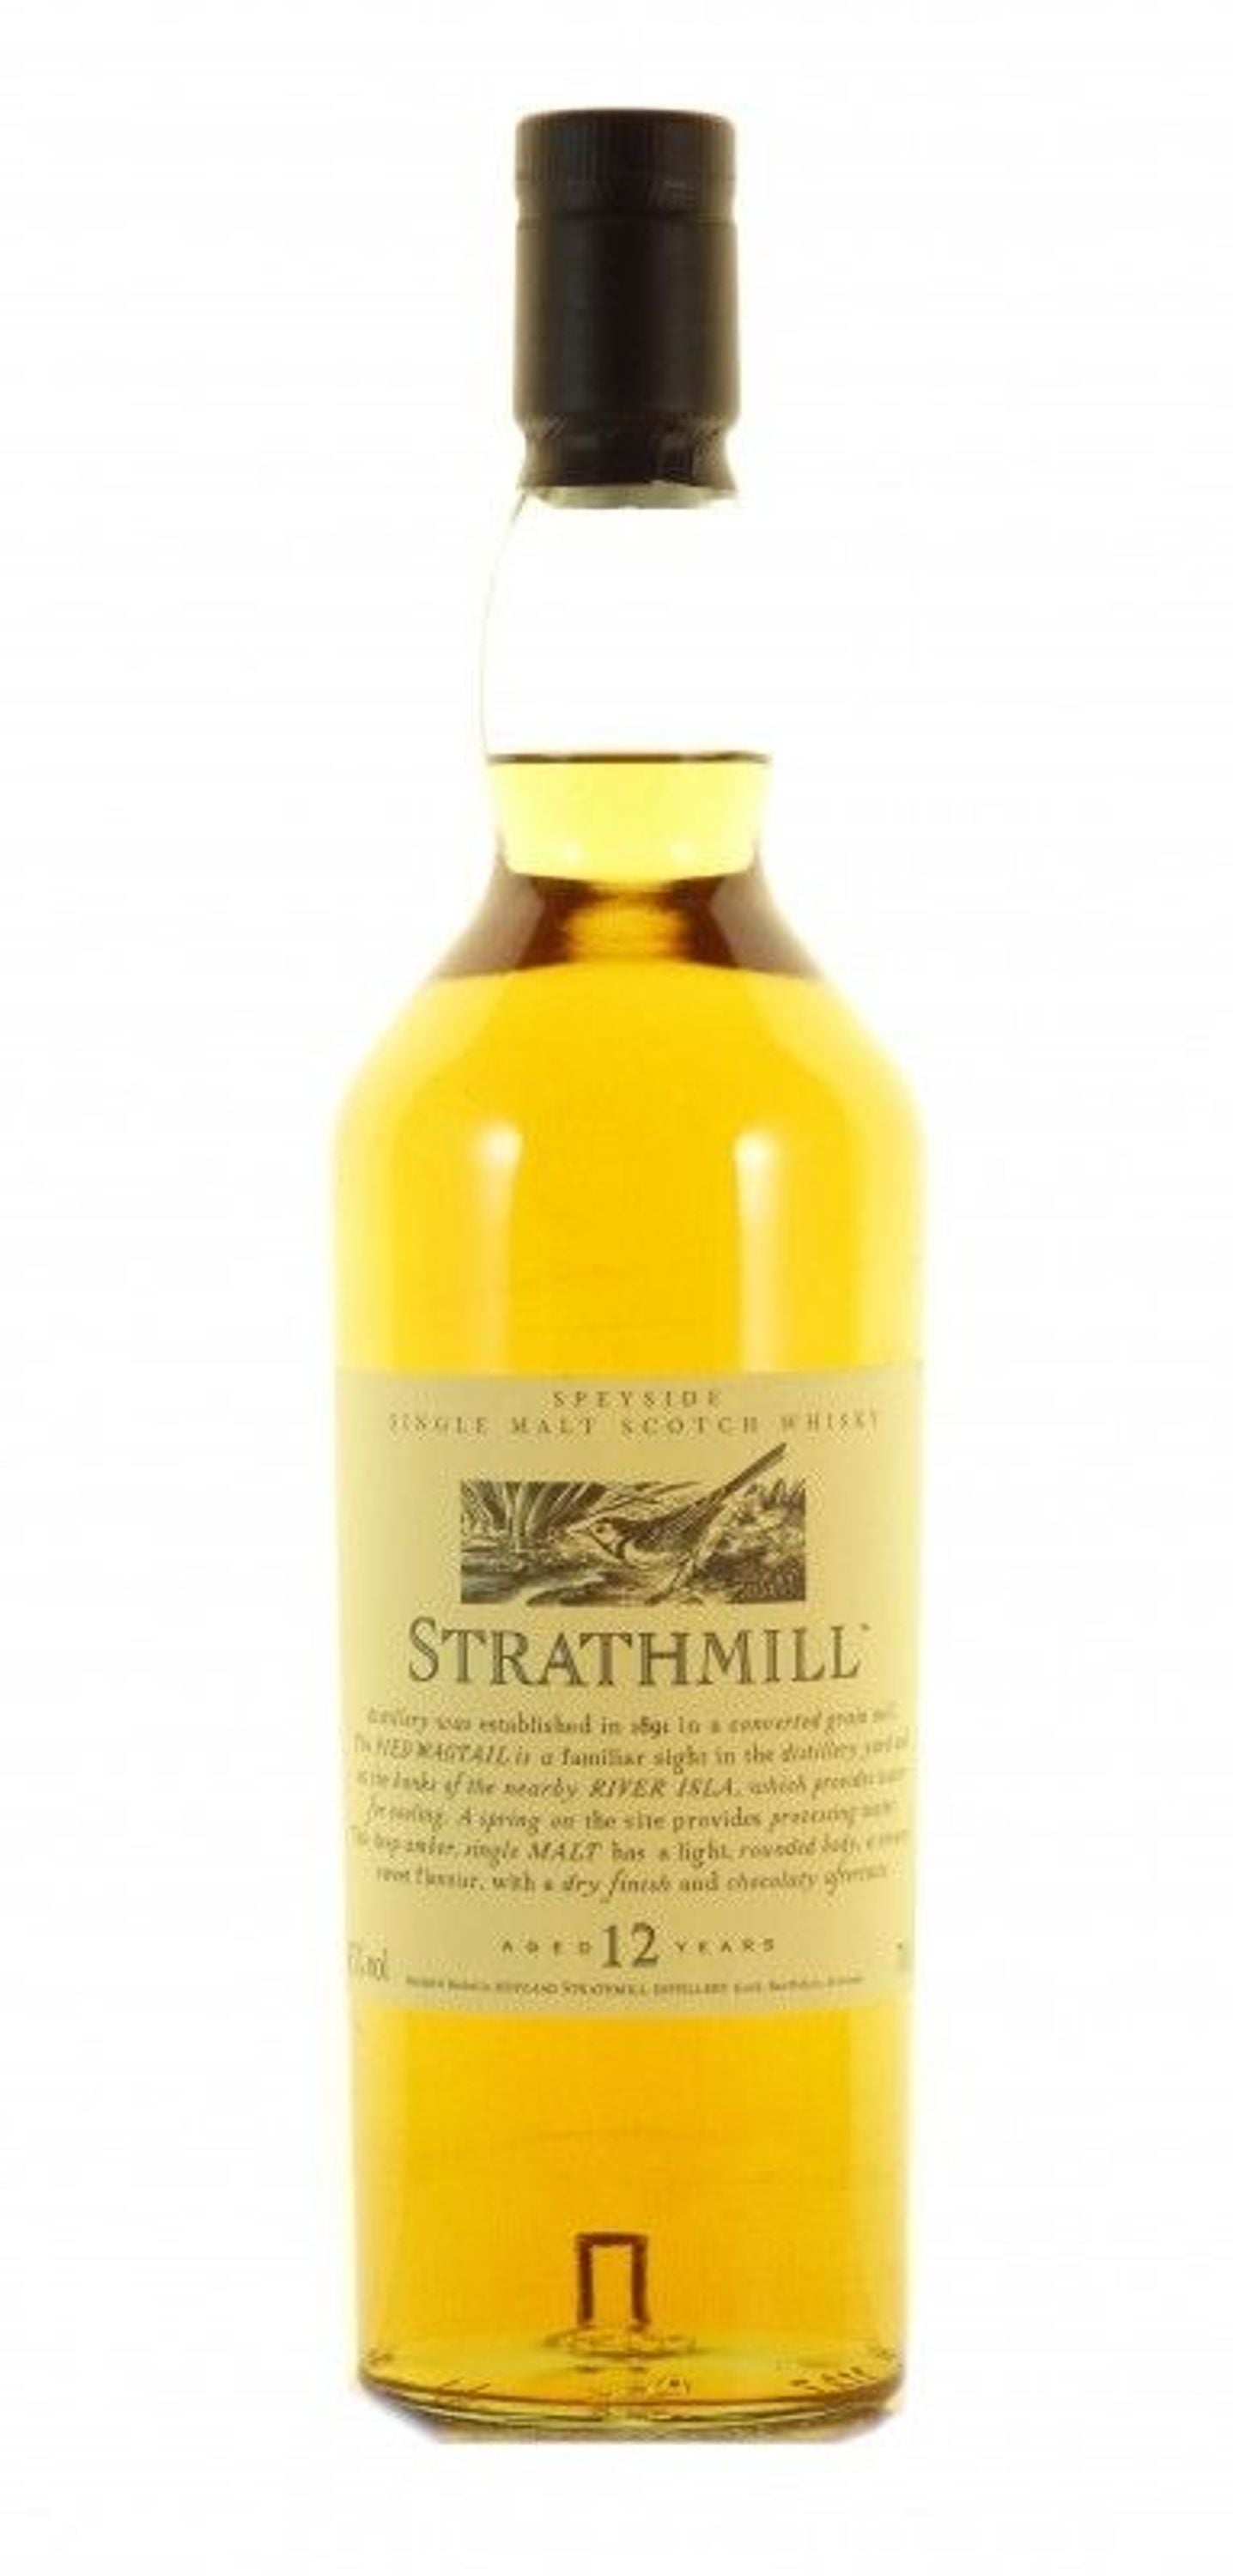 Strathmill 12 Jahre Flora & Fauna Speyside Single Malt Scotch Whisky 0,7l, 43 Vol.-%